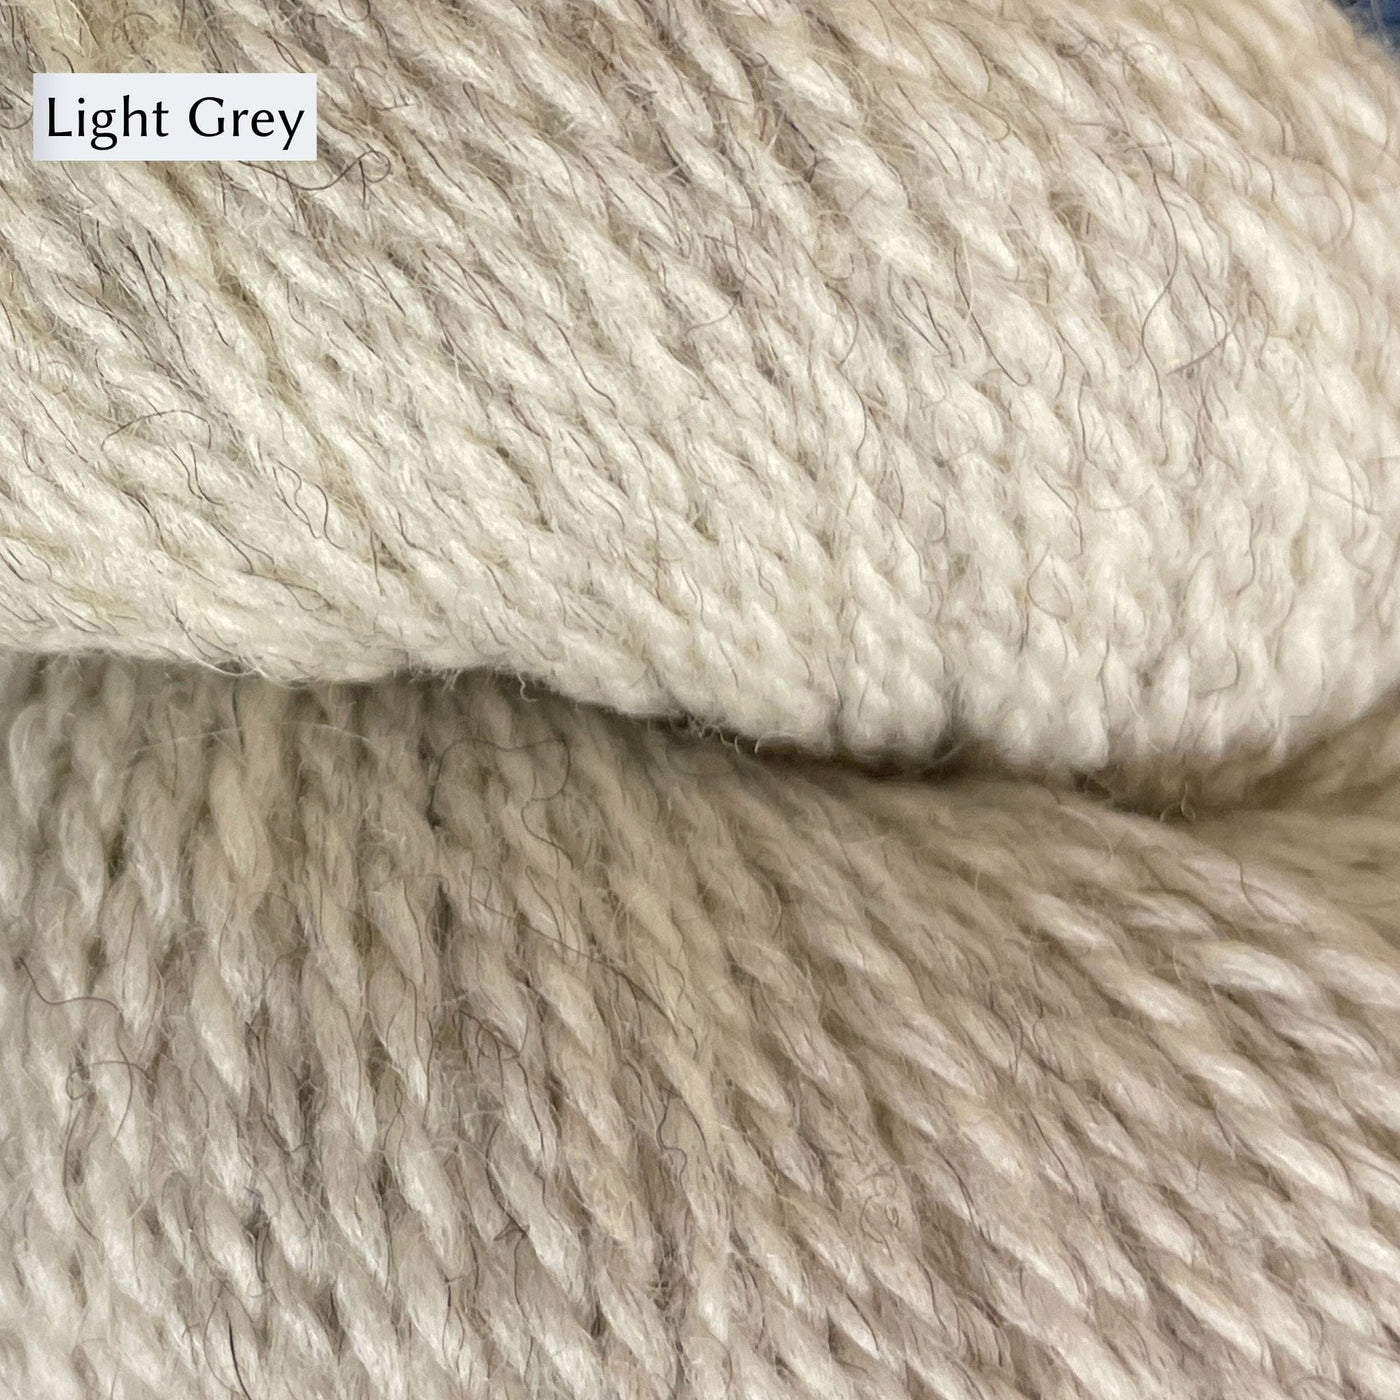 Oysters and Purls DK yarn, a Romney Merino blend. Colorway is Light Grey, a beige grey.